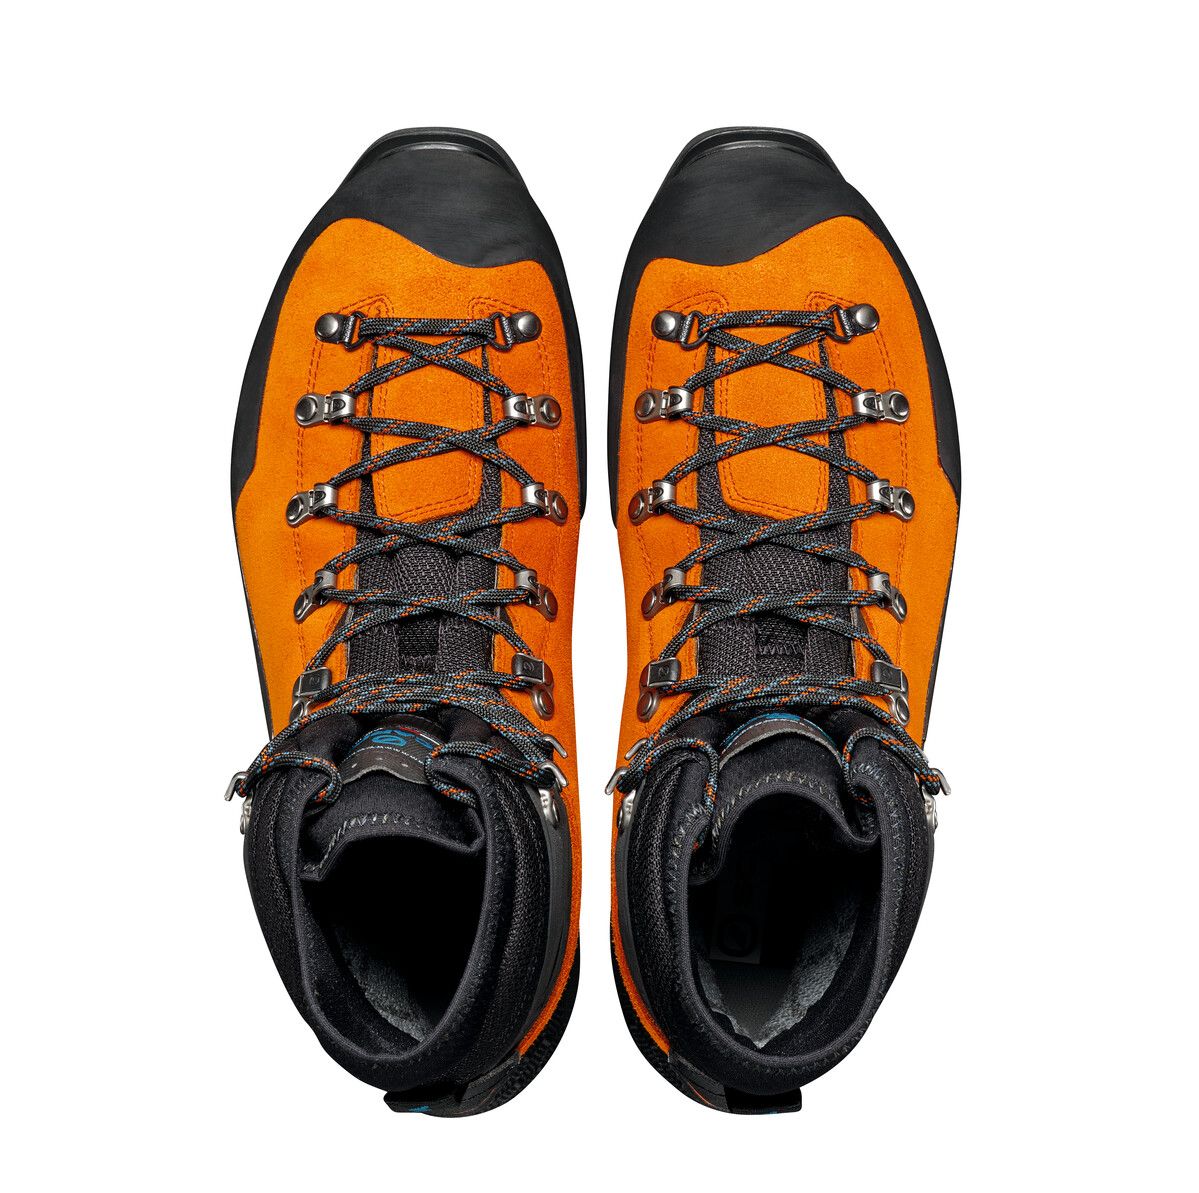 Scarpa Men's Mont Blanc Pro GTX Mountaineering Boots